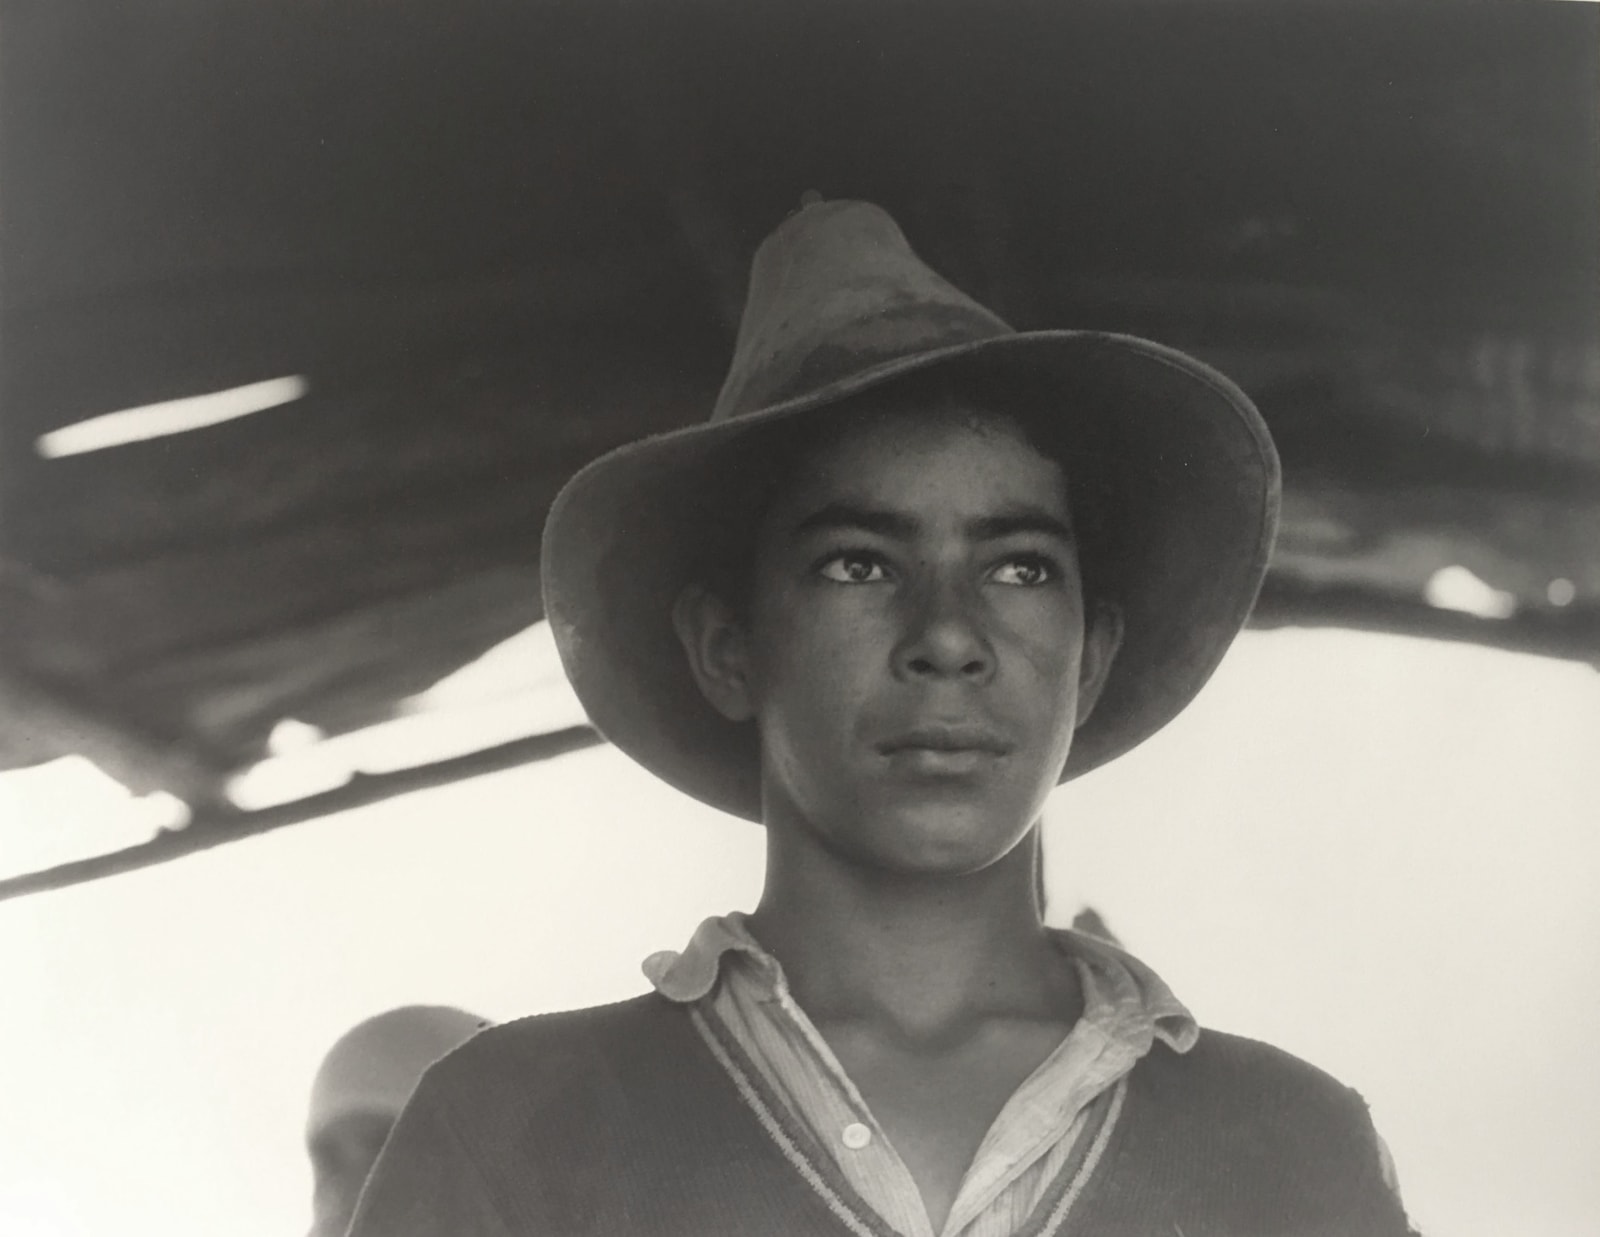 Dorothea Lange Migrant Worker young man in hat 